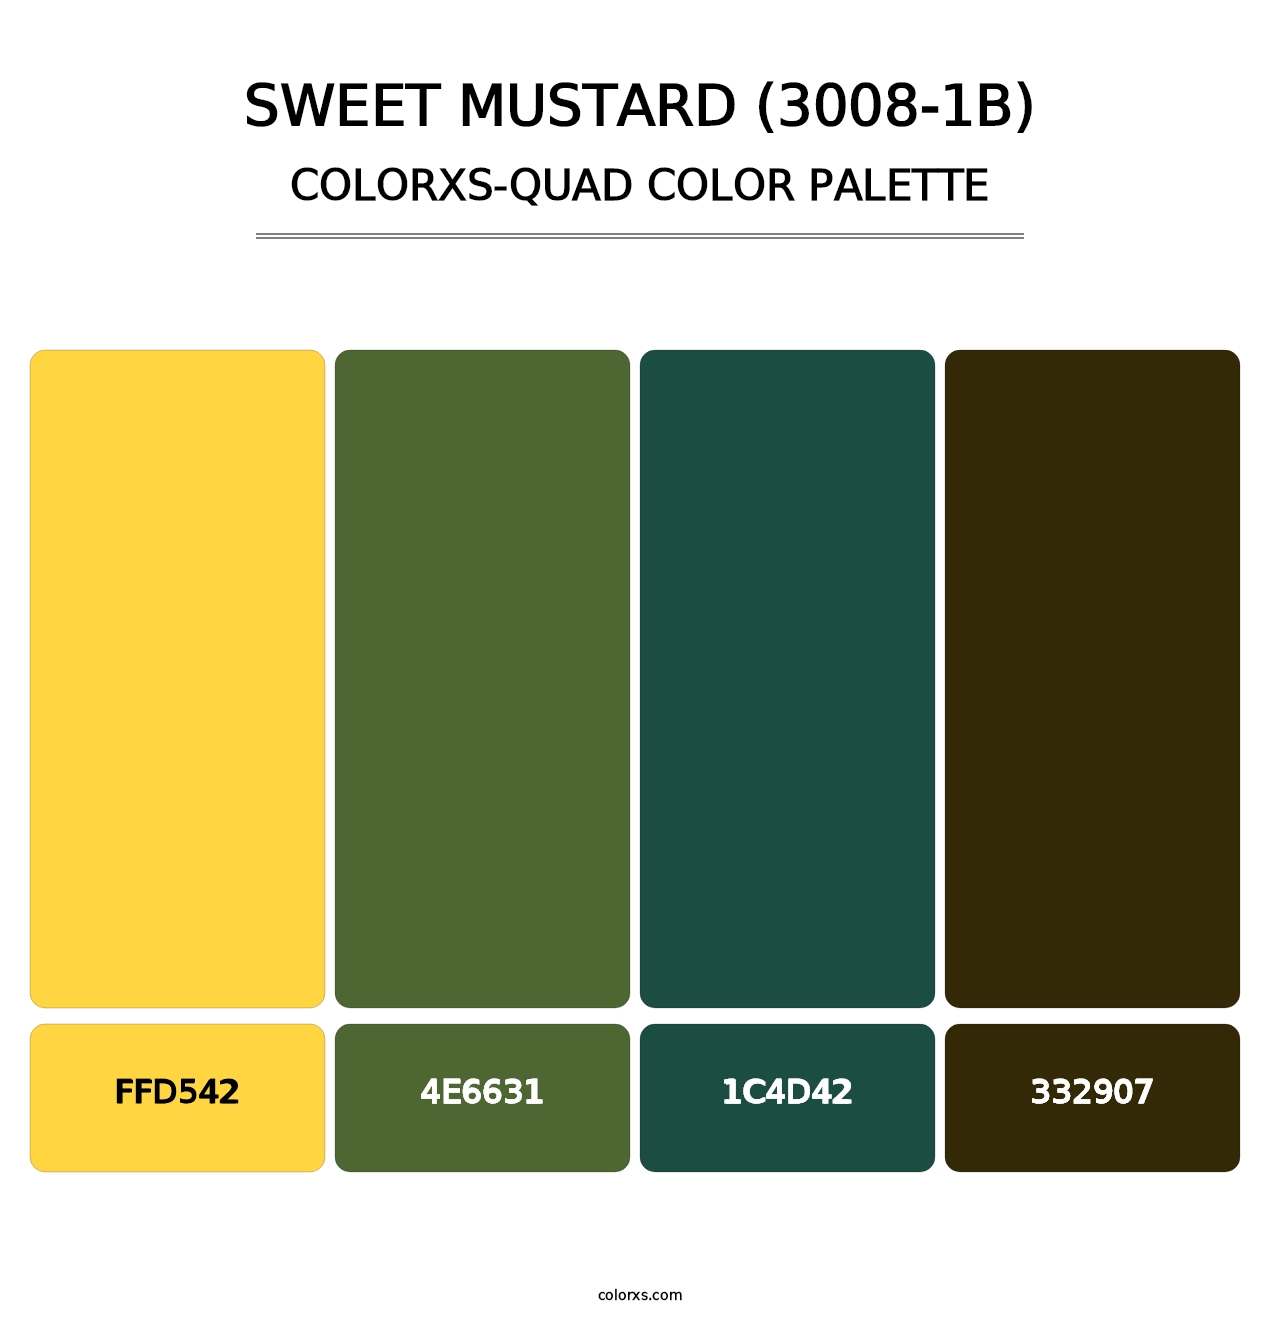 Sweet Mustard (3008-1B) - Colorxs Quad Palette